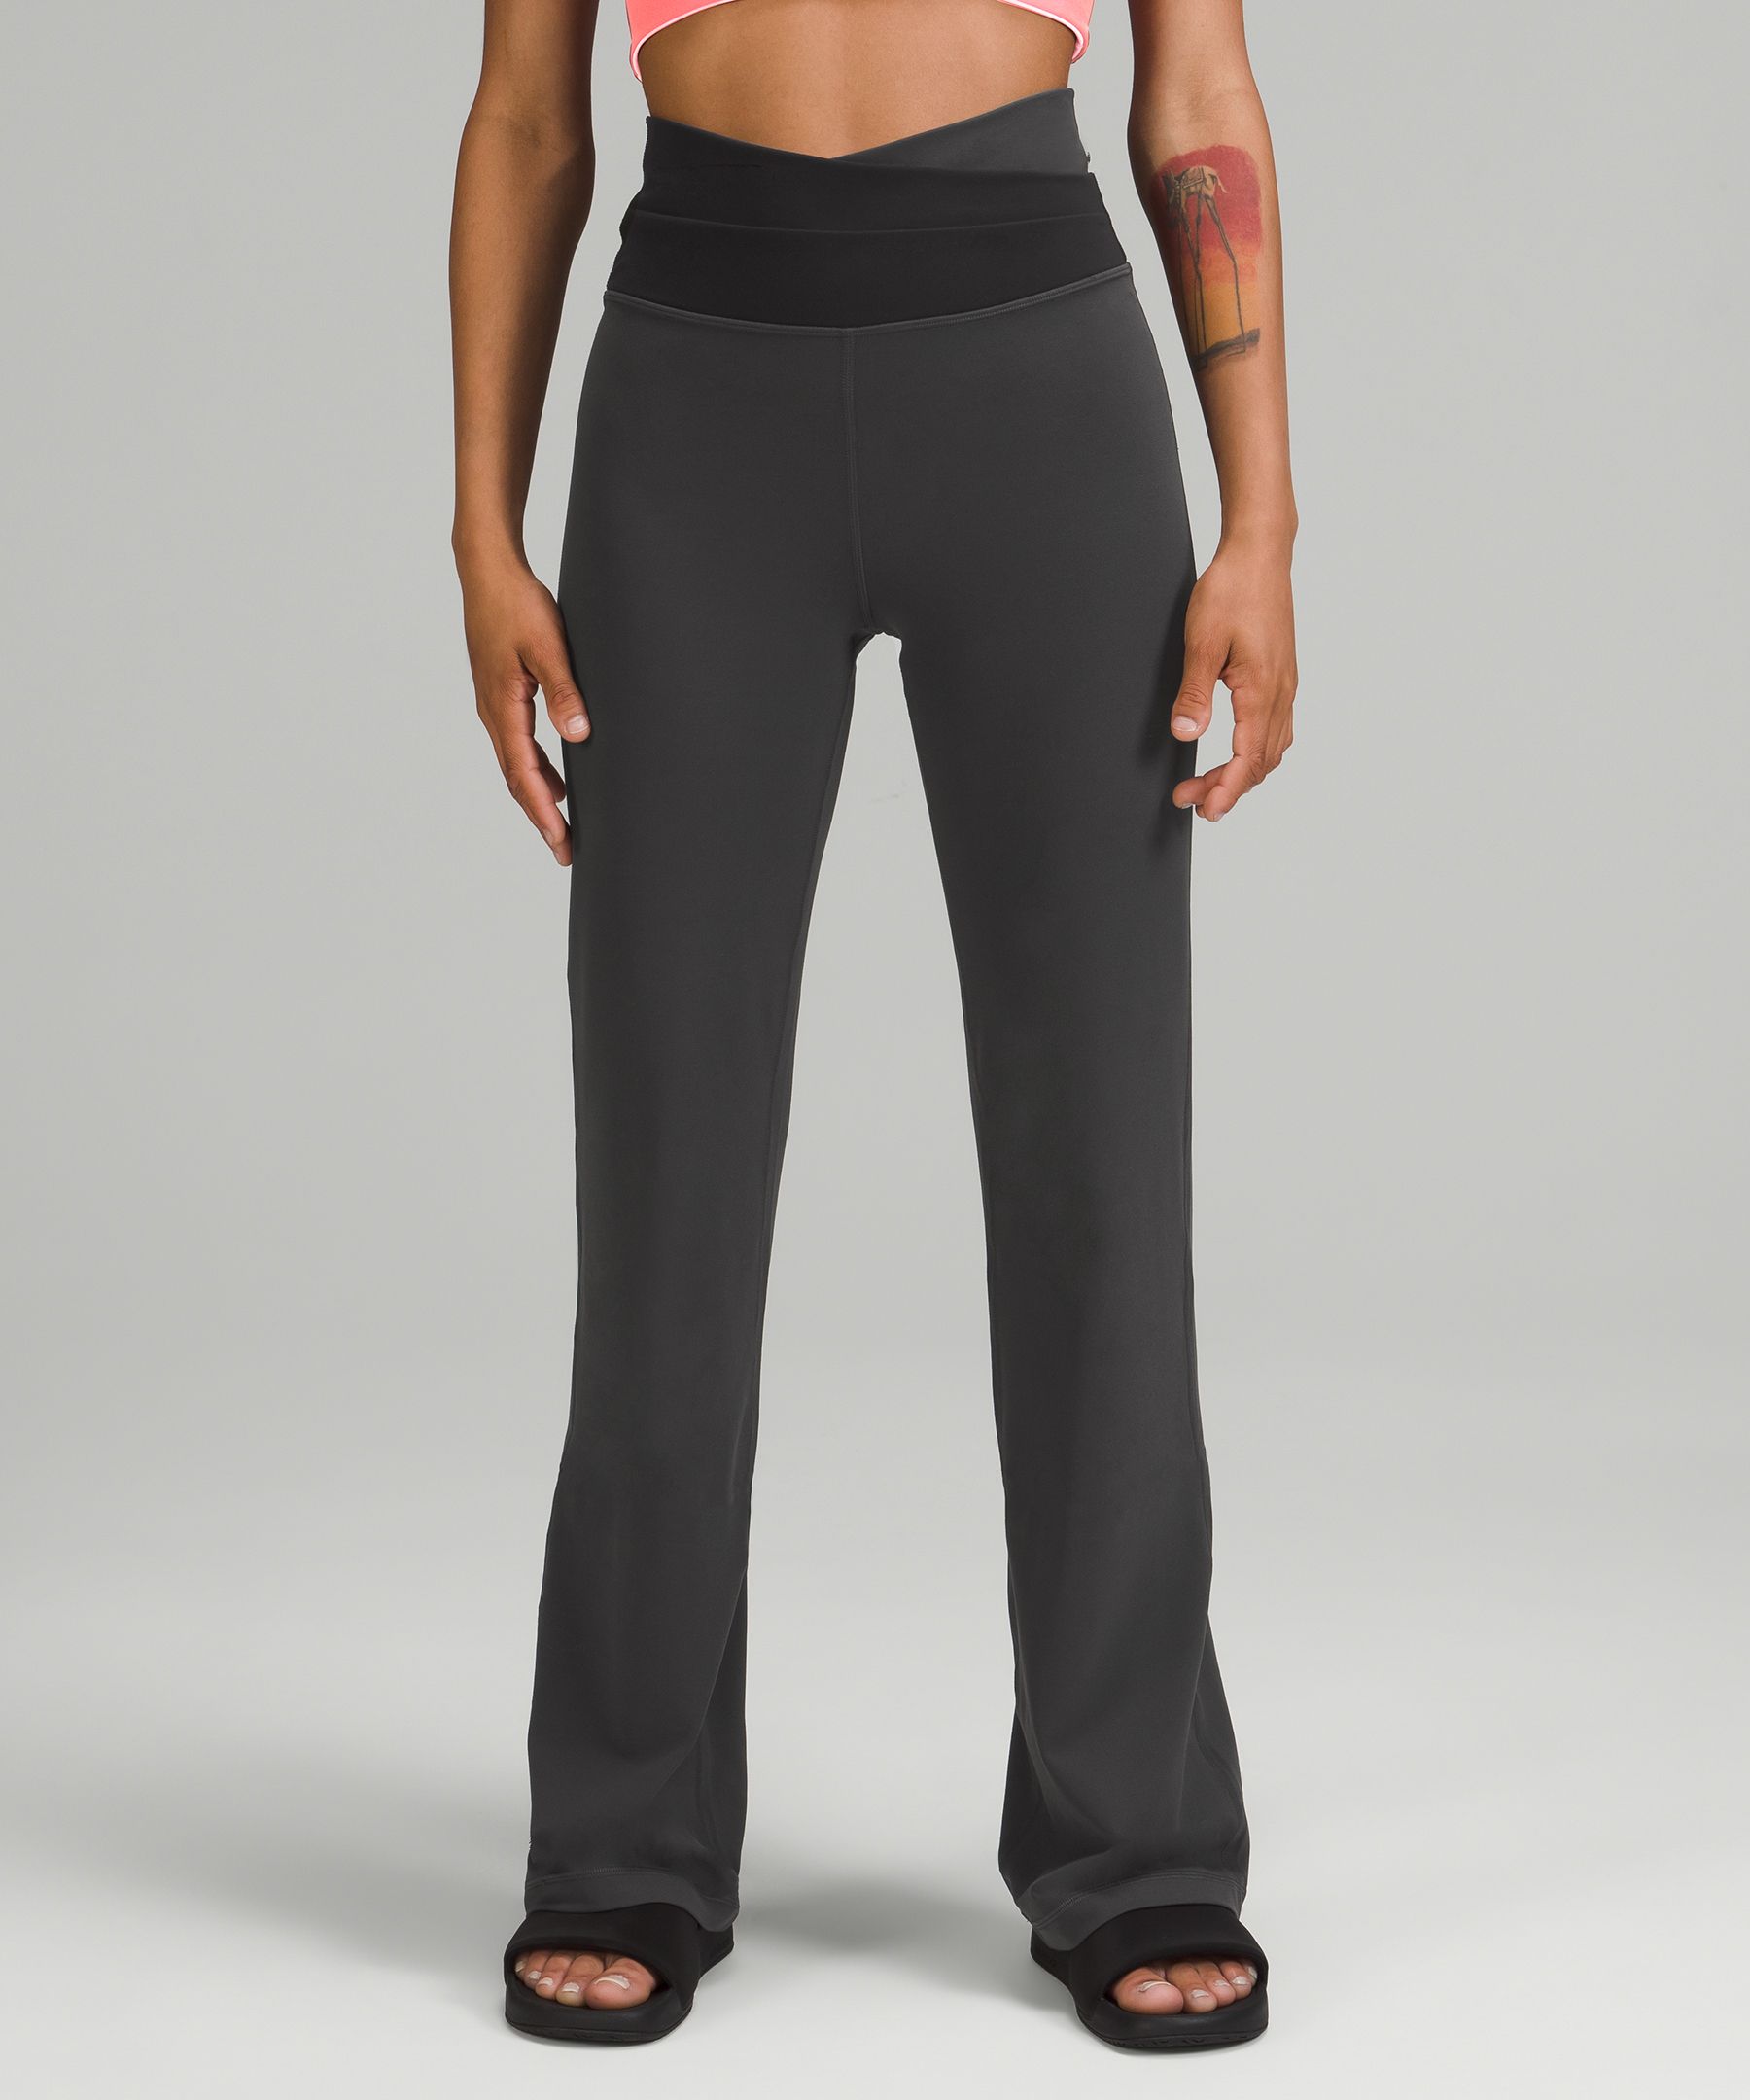 Lululemon Astro Pant Yoga Pants Color Black Size 6. Pre-owned